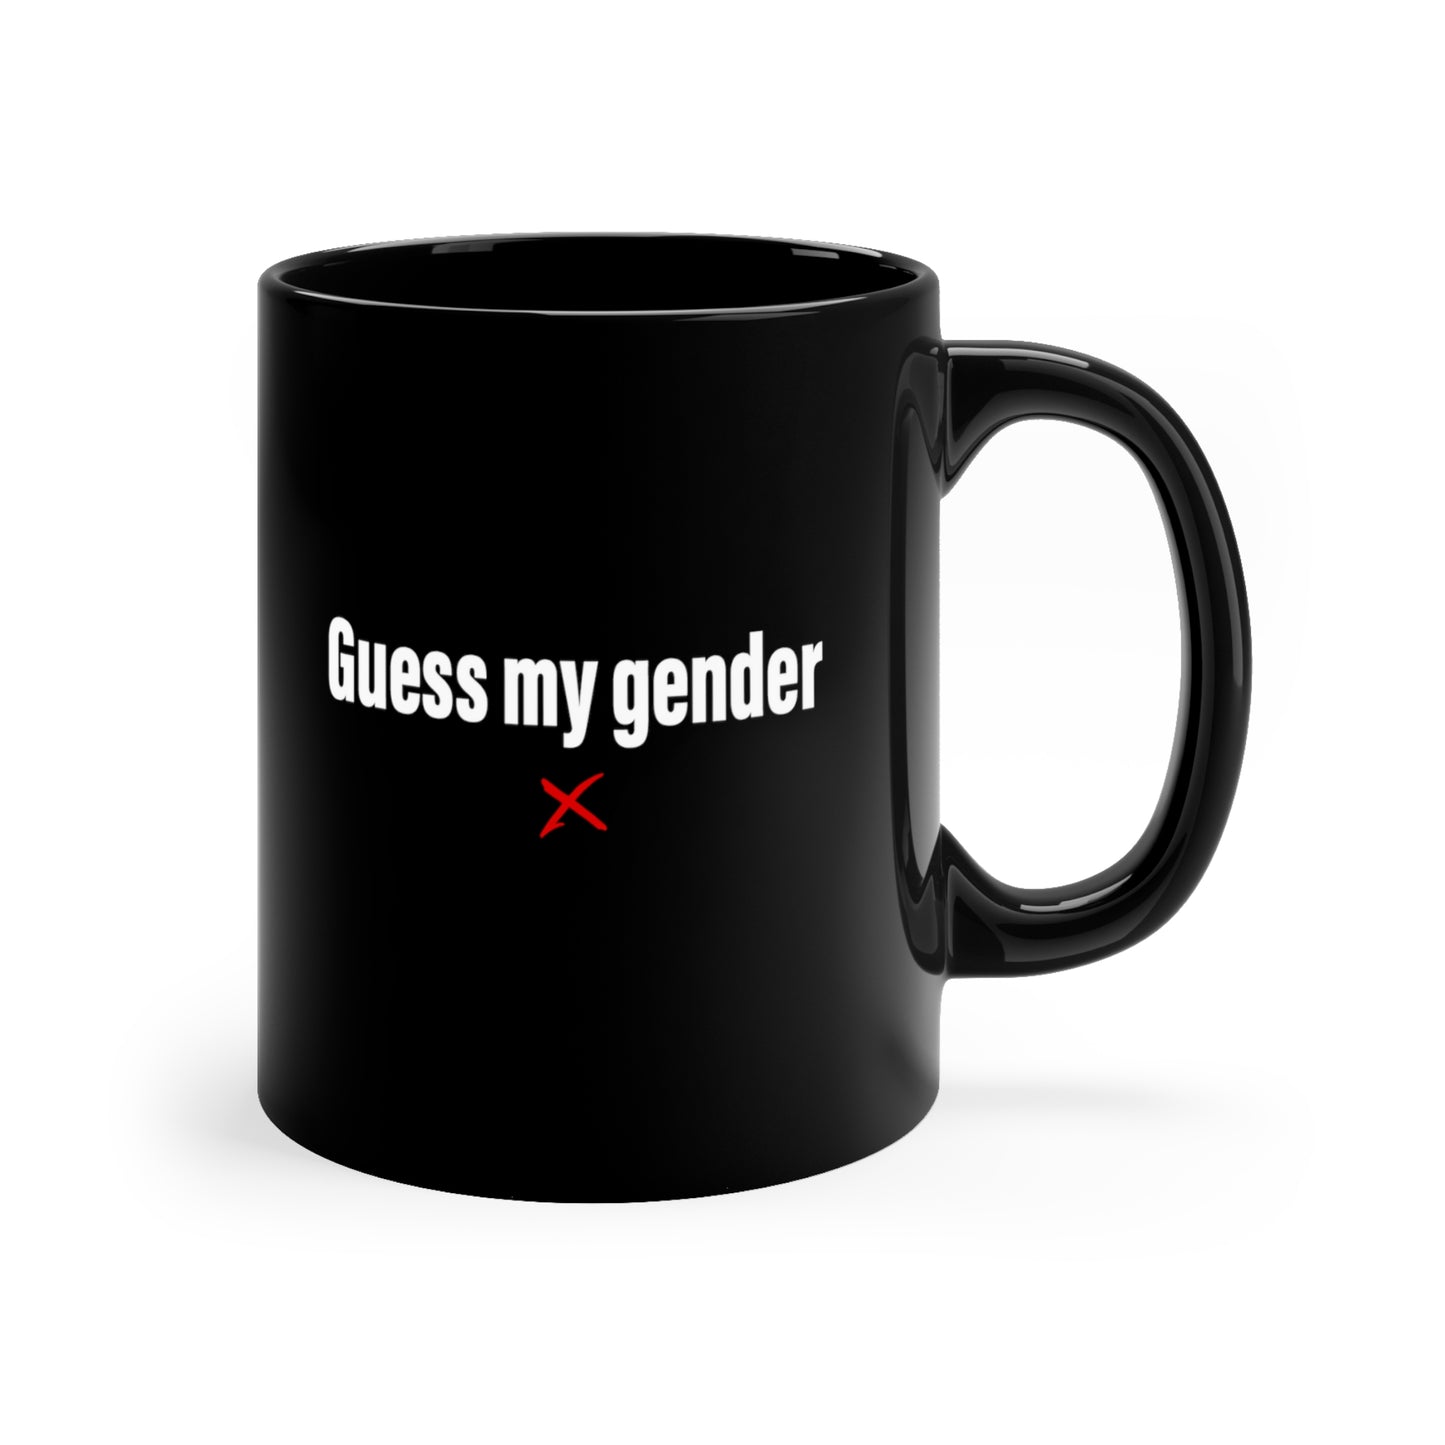 Guess my gender - Mug